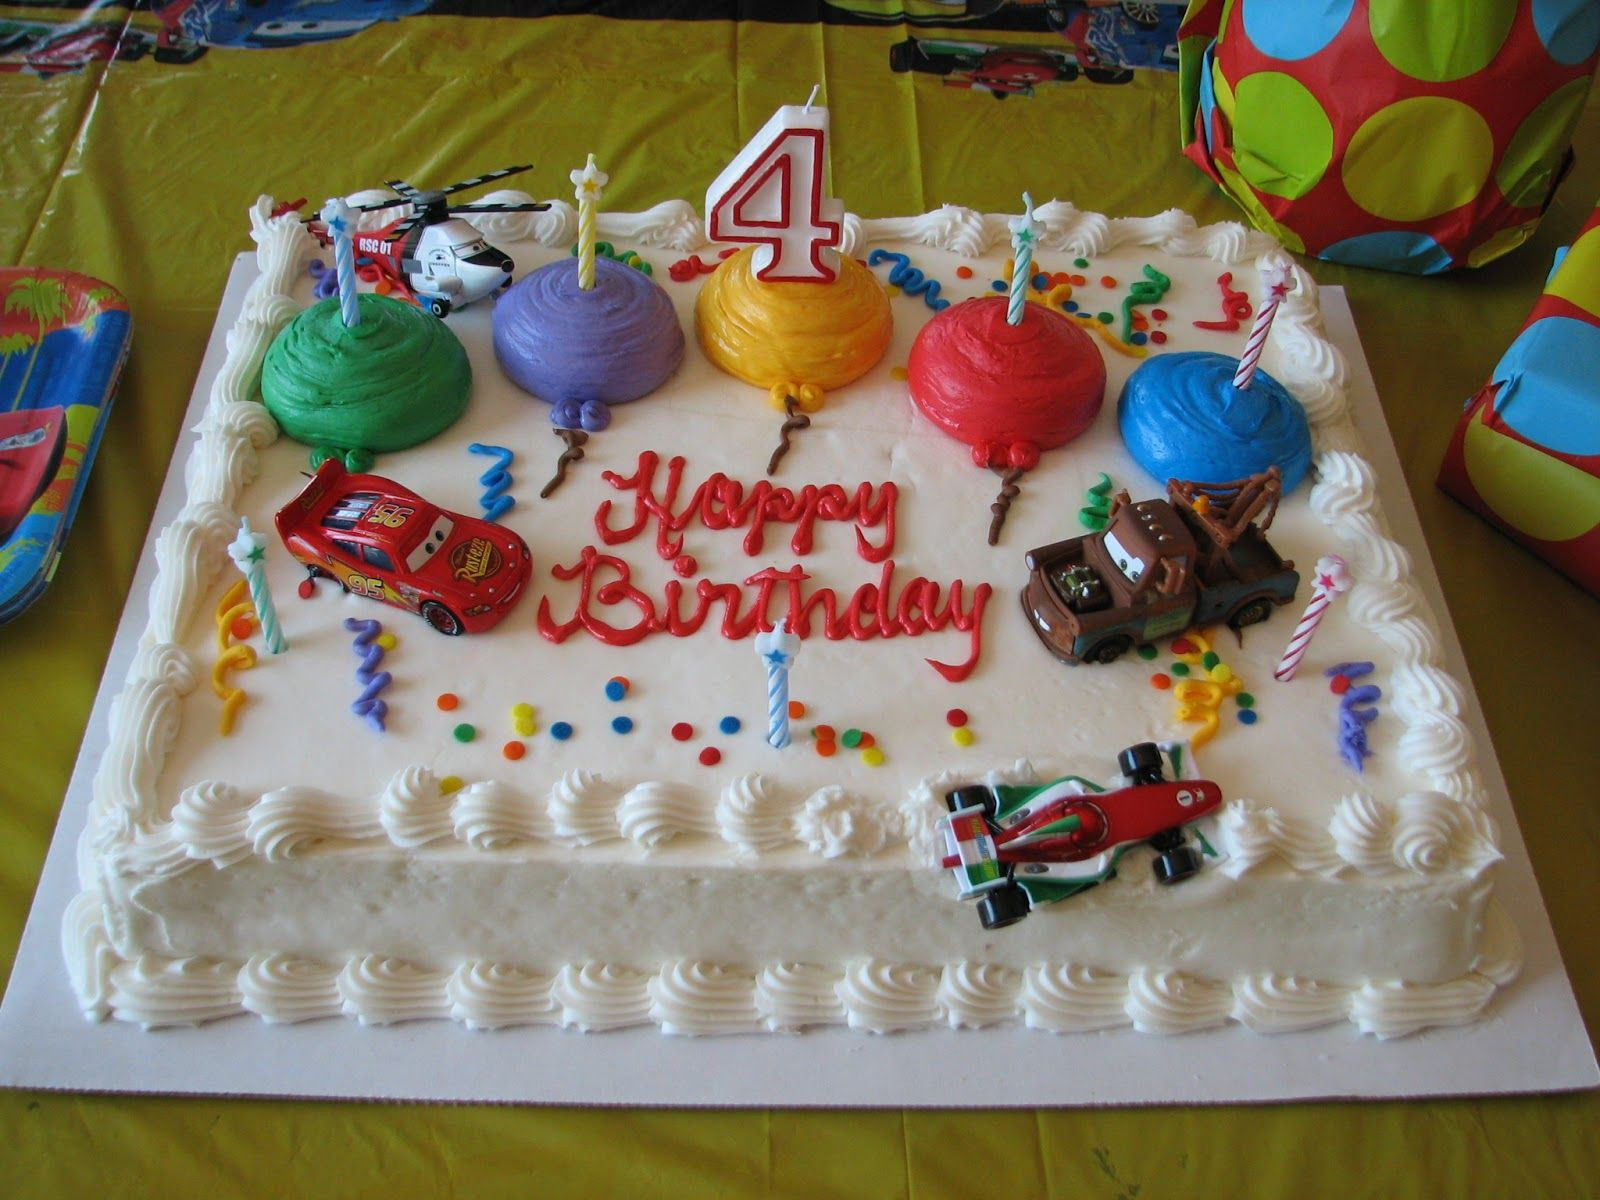 Costco Birthday Cakes Designs
 costco cakes with figurines Google Search